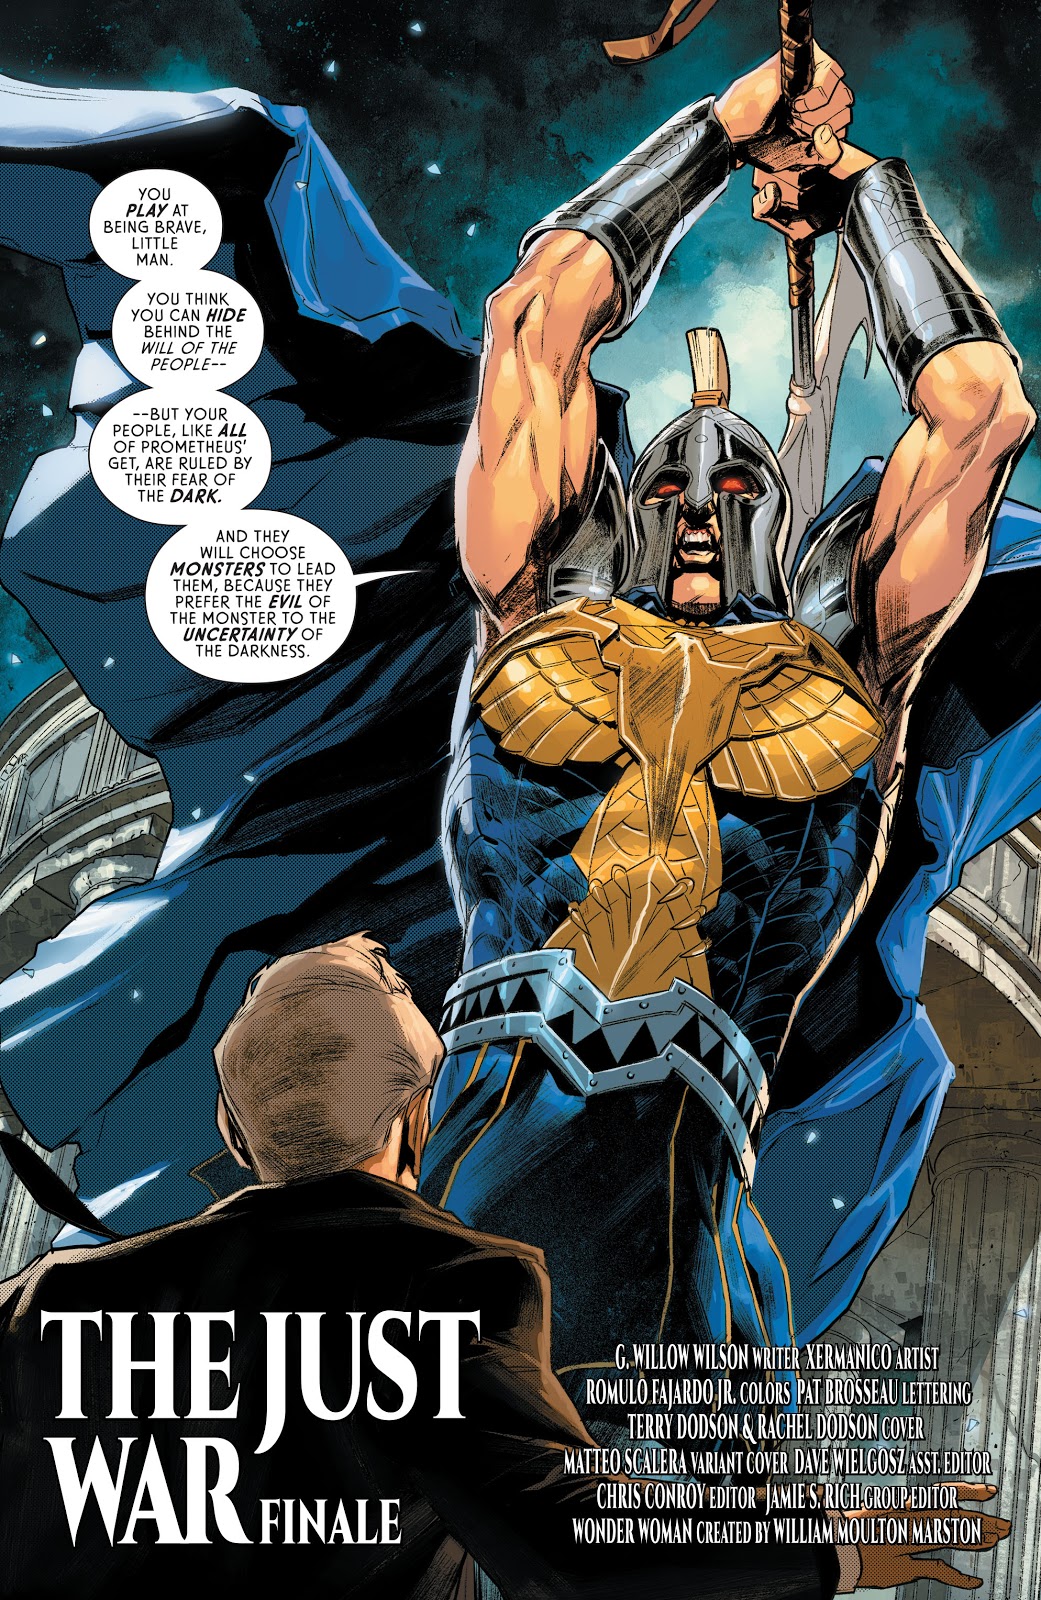 Ares (Wonder Woman Vol. 5 #62)